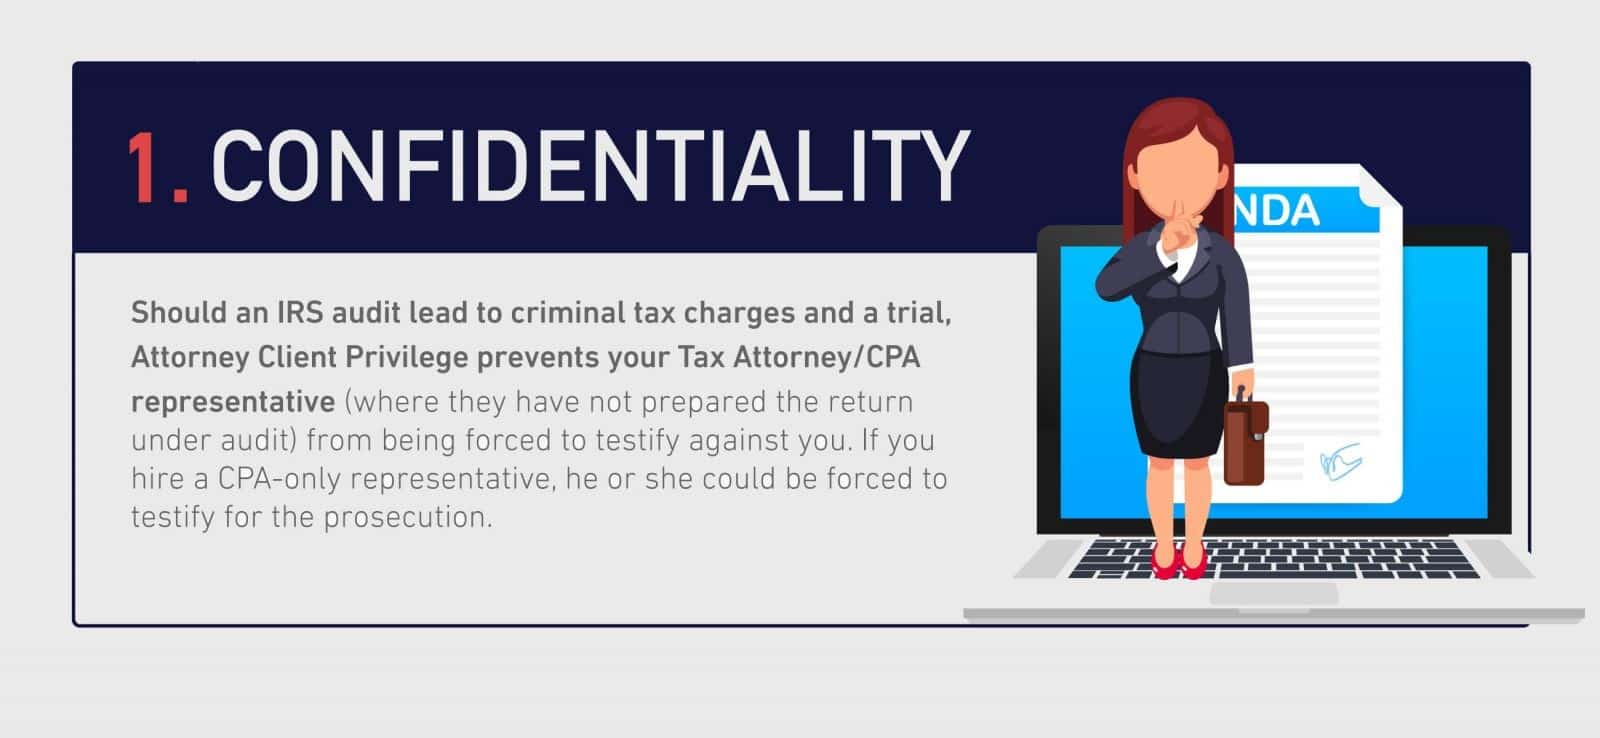 Confidentiality-klasing-associates-panorama-city-tax-attorney